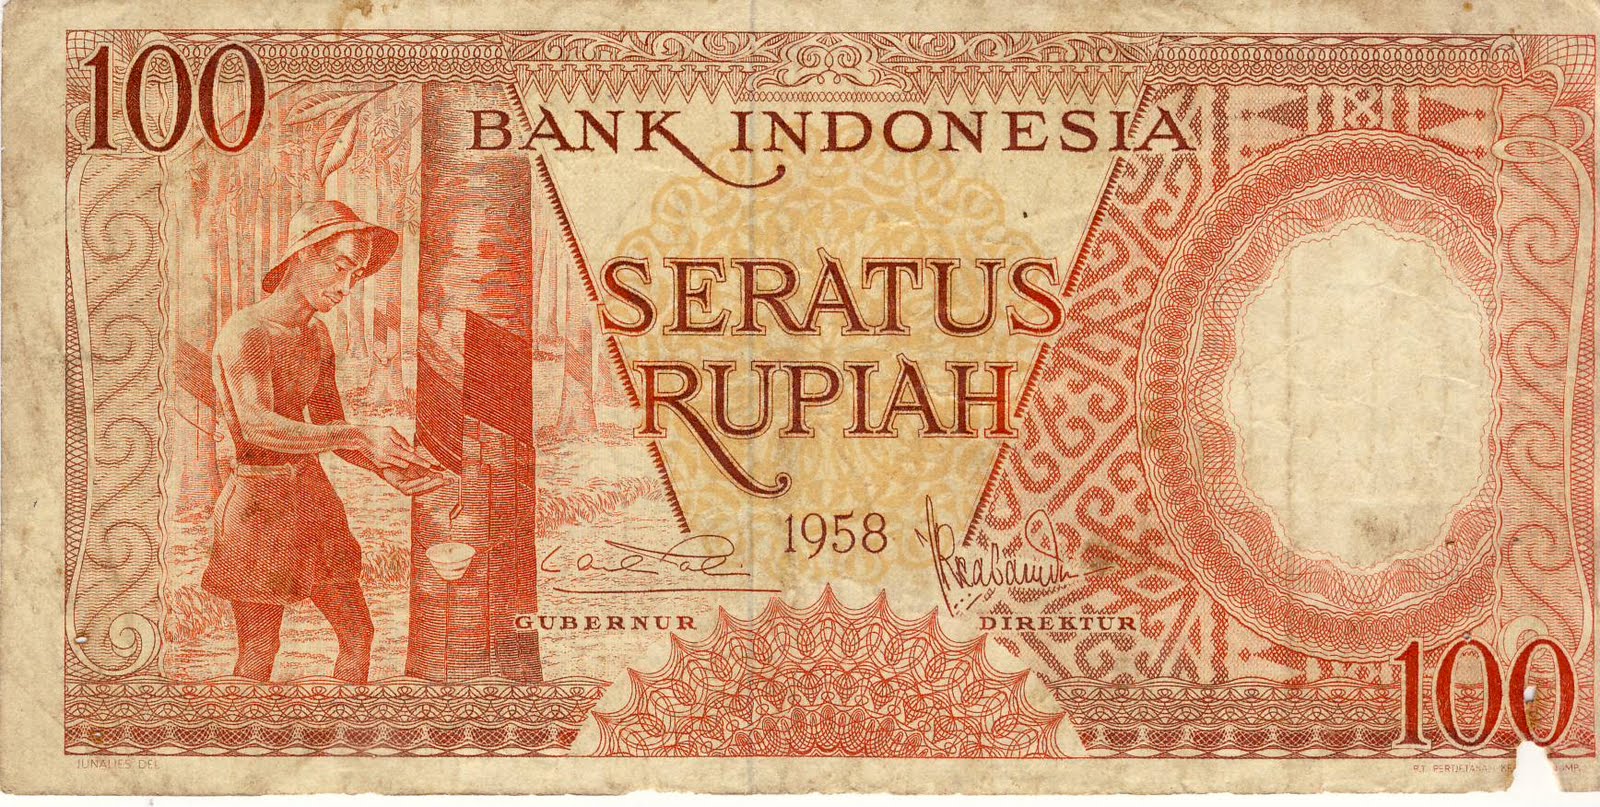  Uang kertas  kuno Indonesia pecahan Rp 100 seratus 